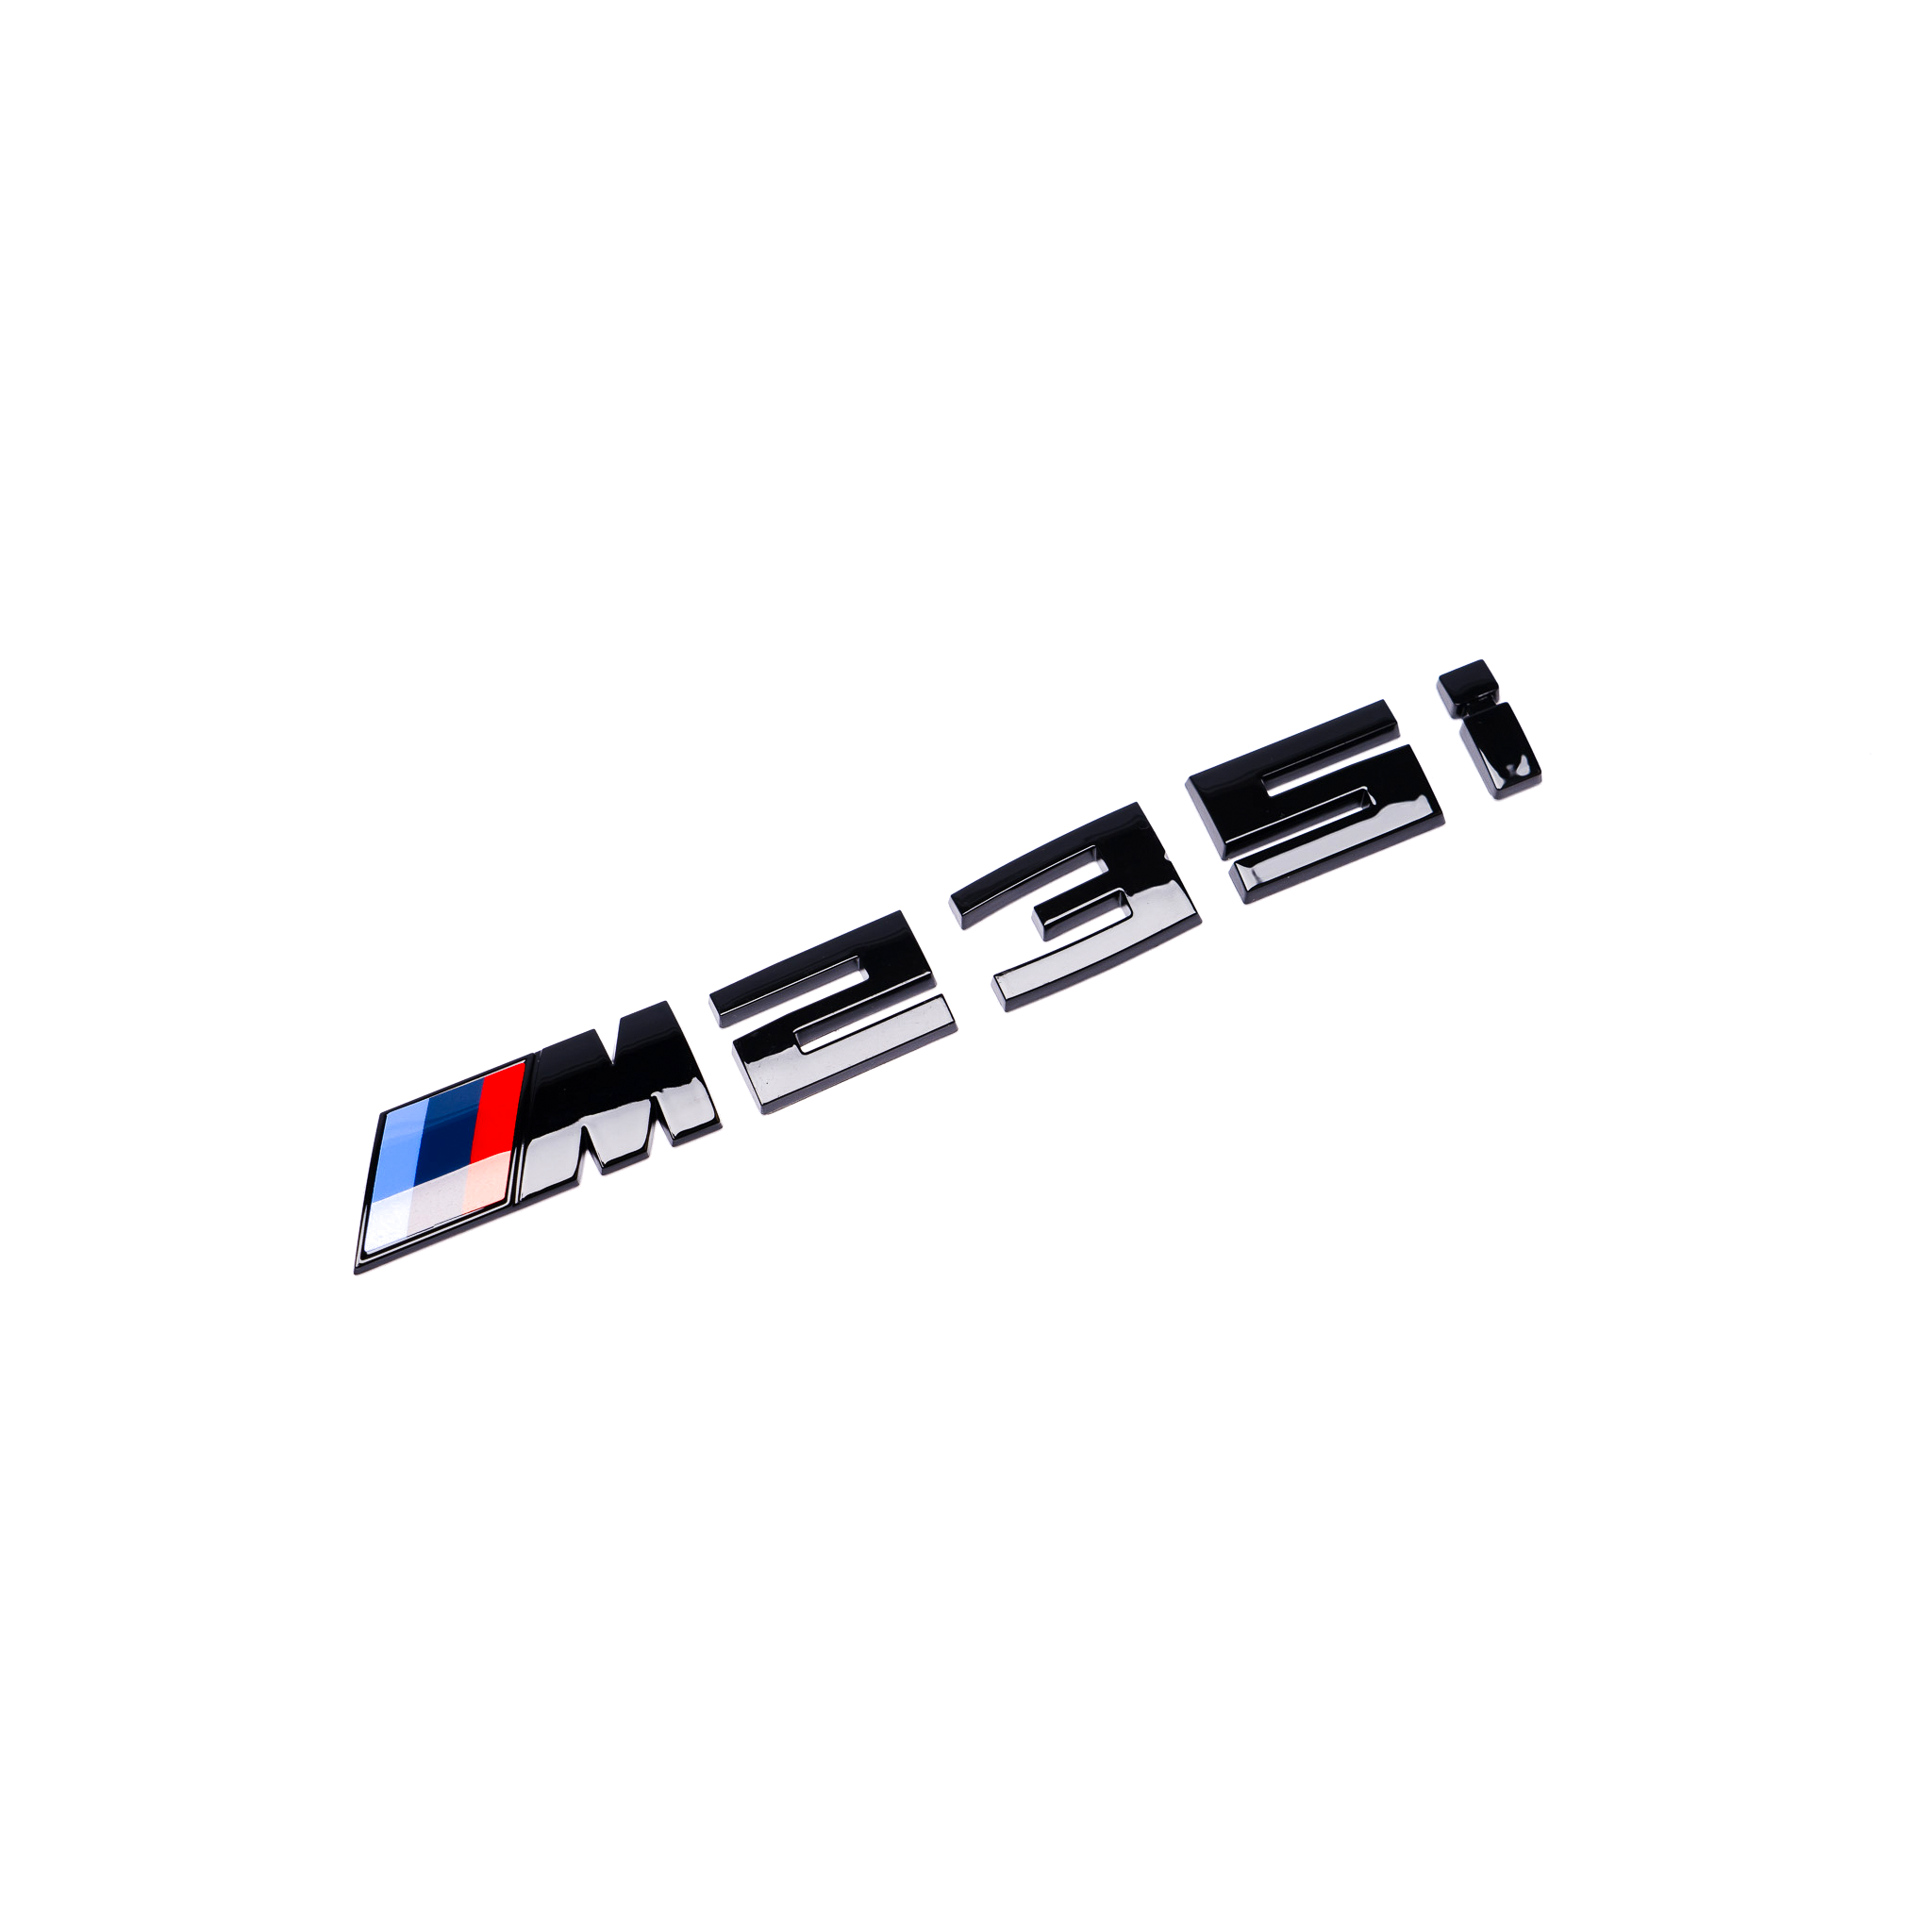 Exon Gloss Black M235i Emblema para maletero para BMW 2-Series M235i F22 F23 G42 G43